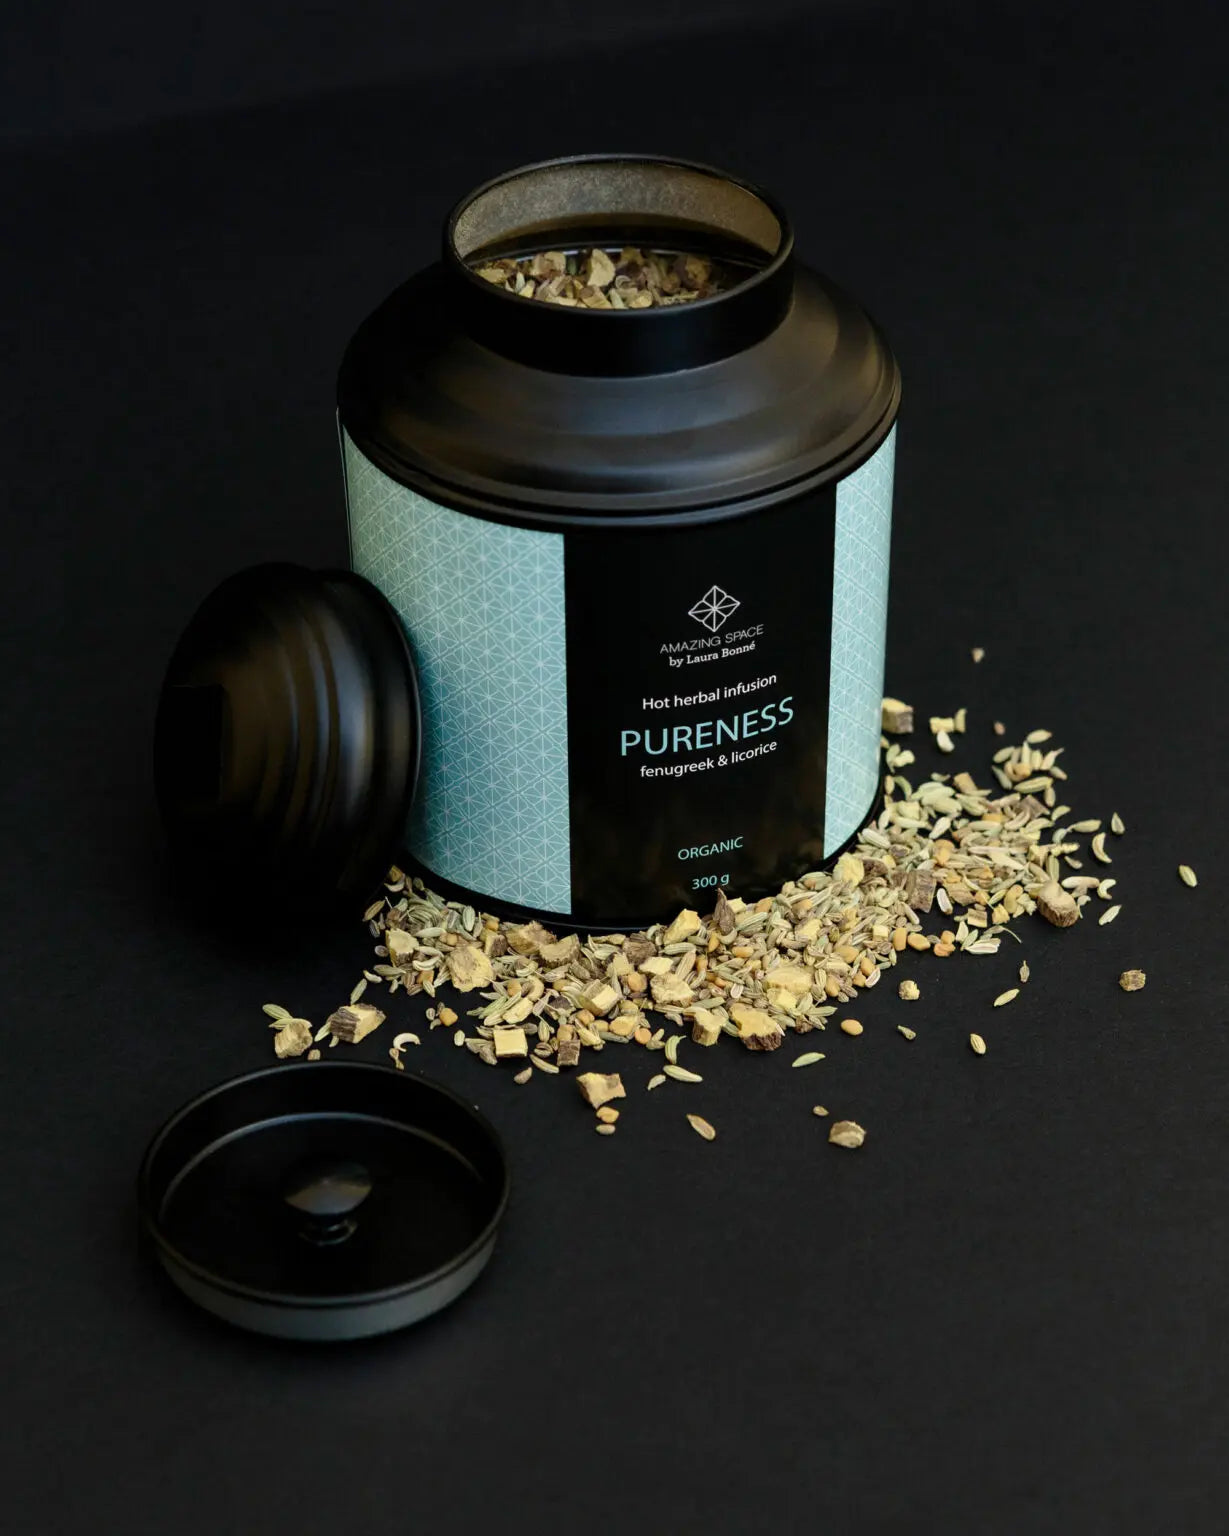 Amazing Space - Pureness Fenugreek & Licorice Tea